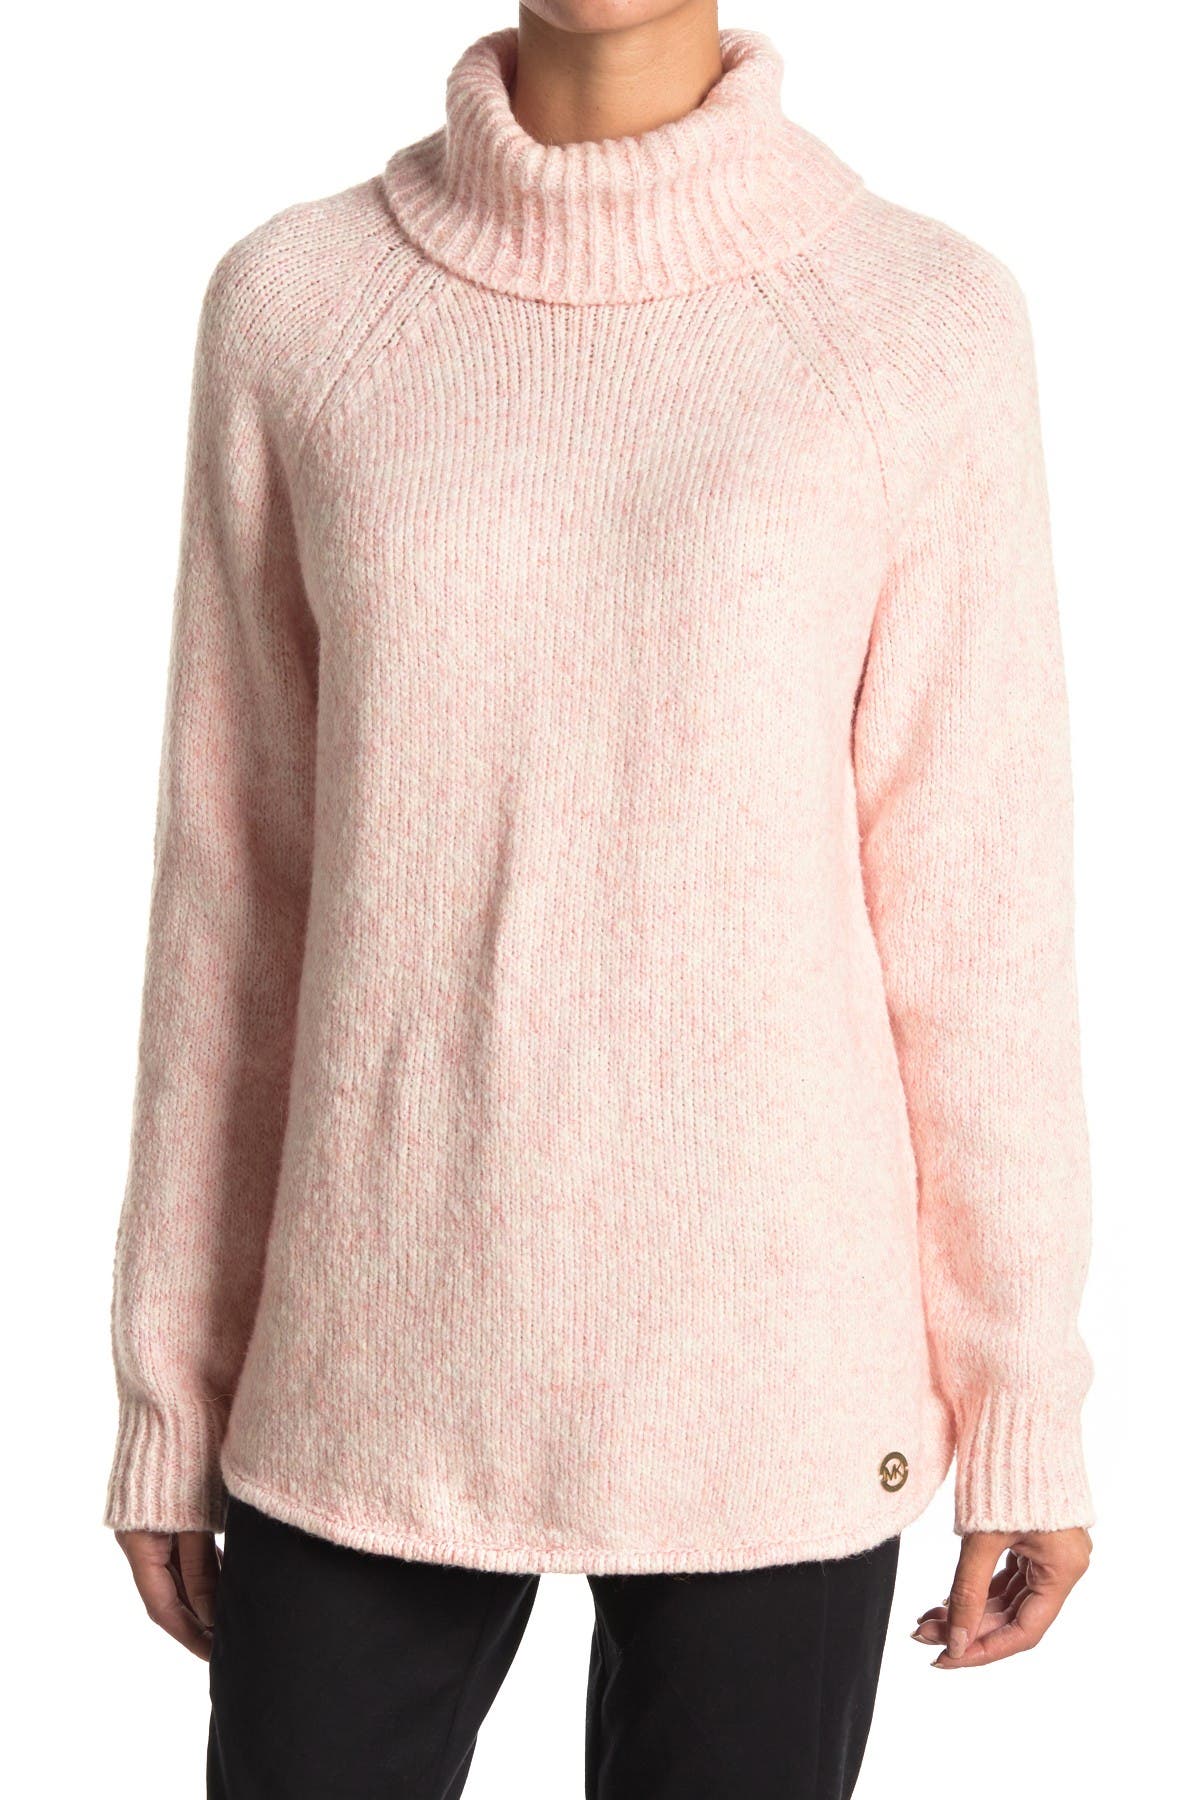 michael kors pink sweater